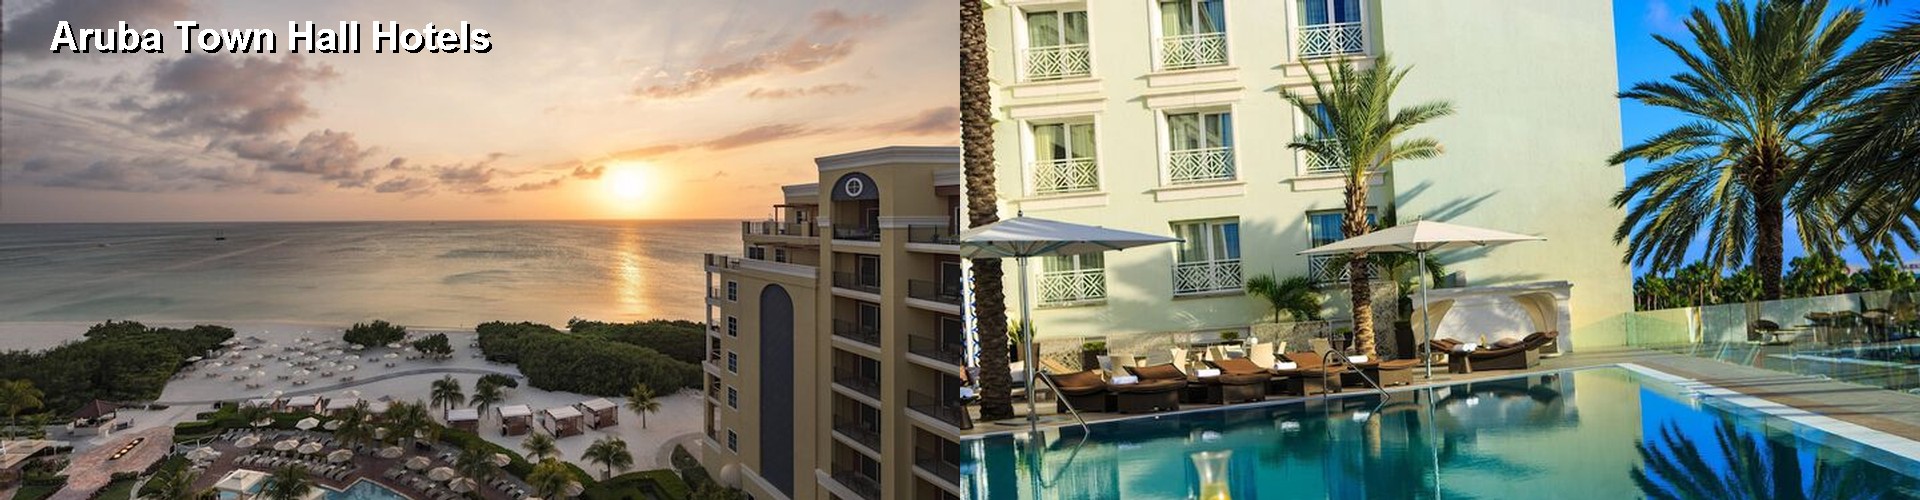 5 Best Hotels near Aruba Town Hall